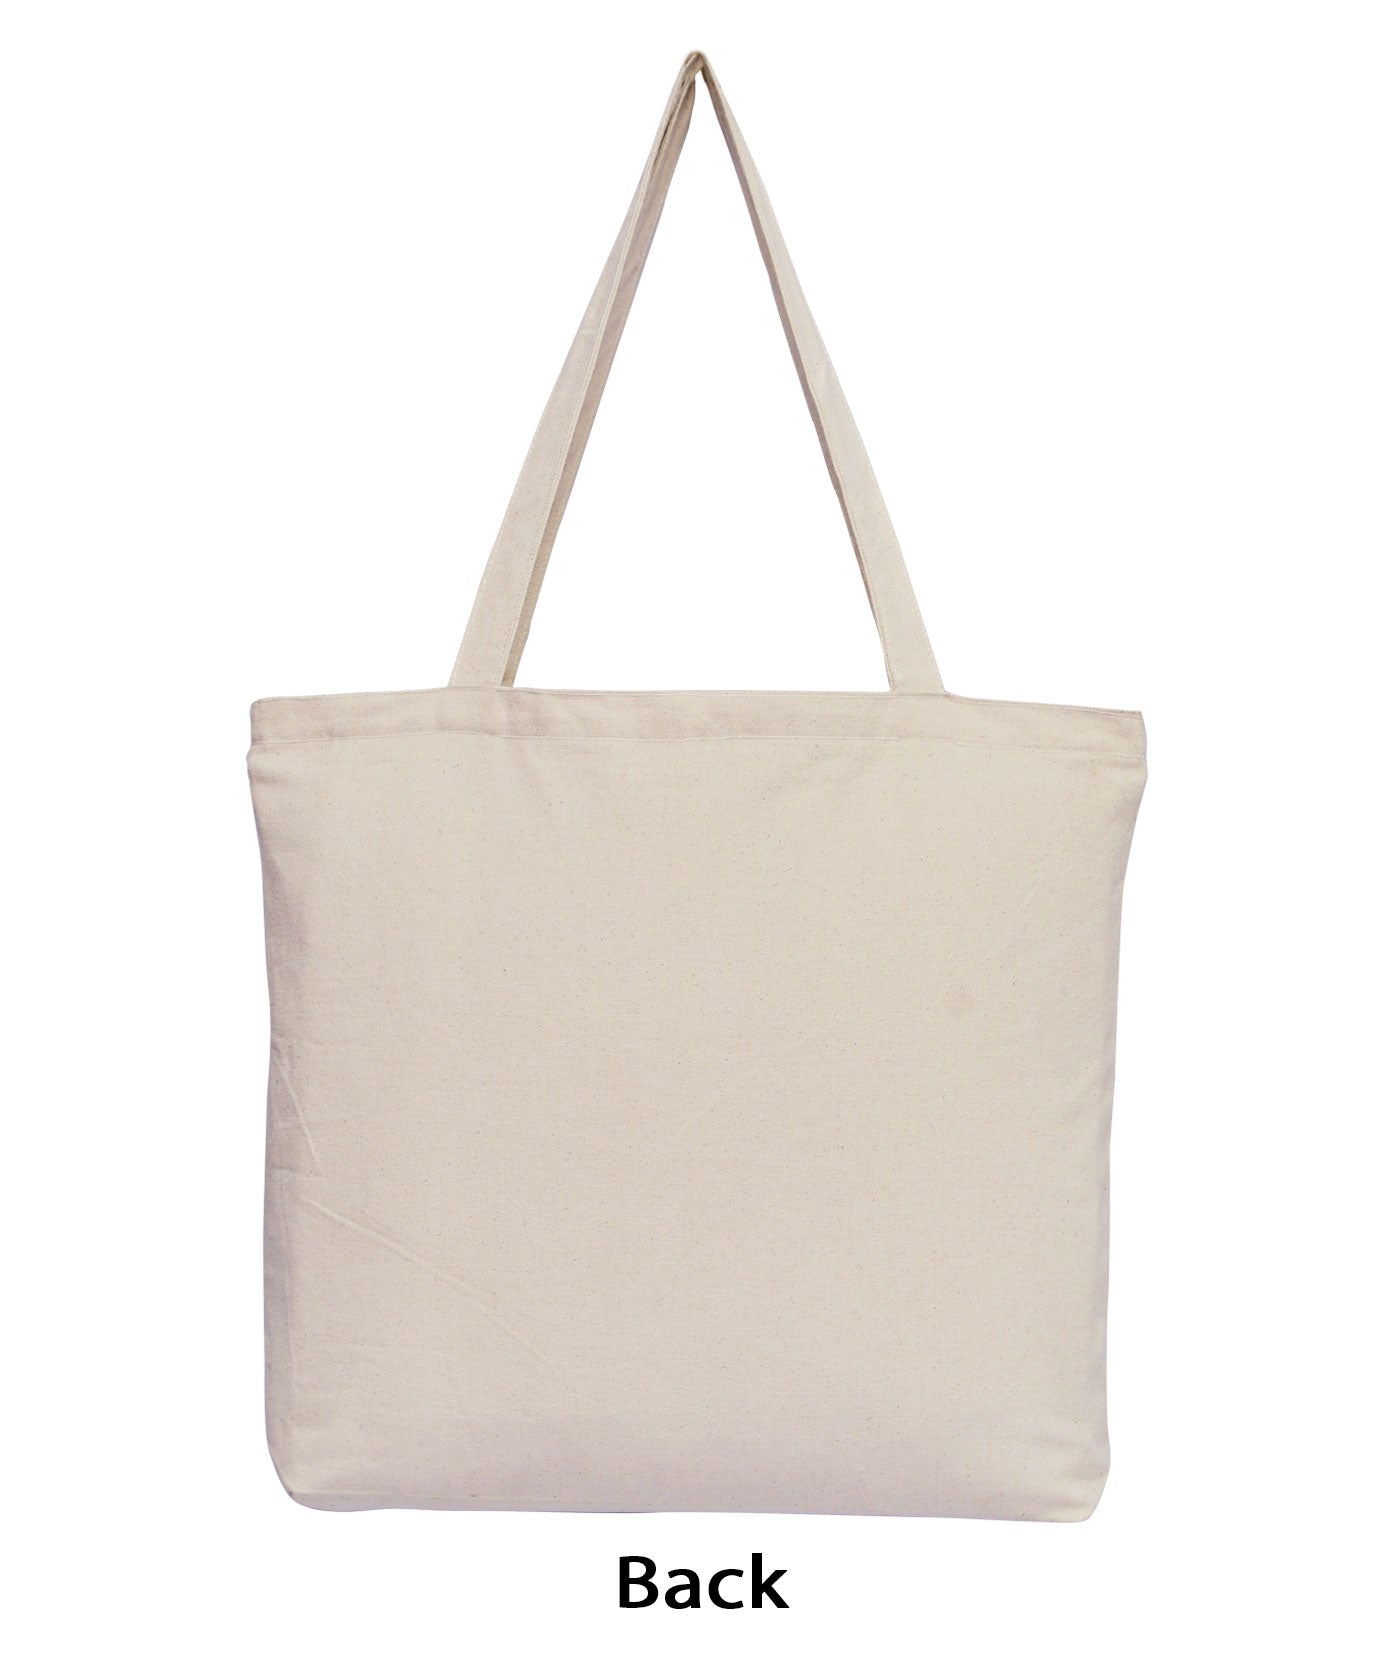 I Love Assam - Natural Tote Bag